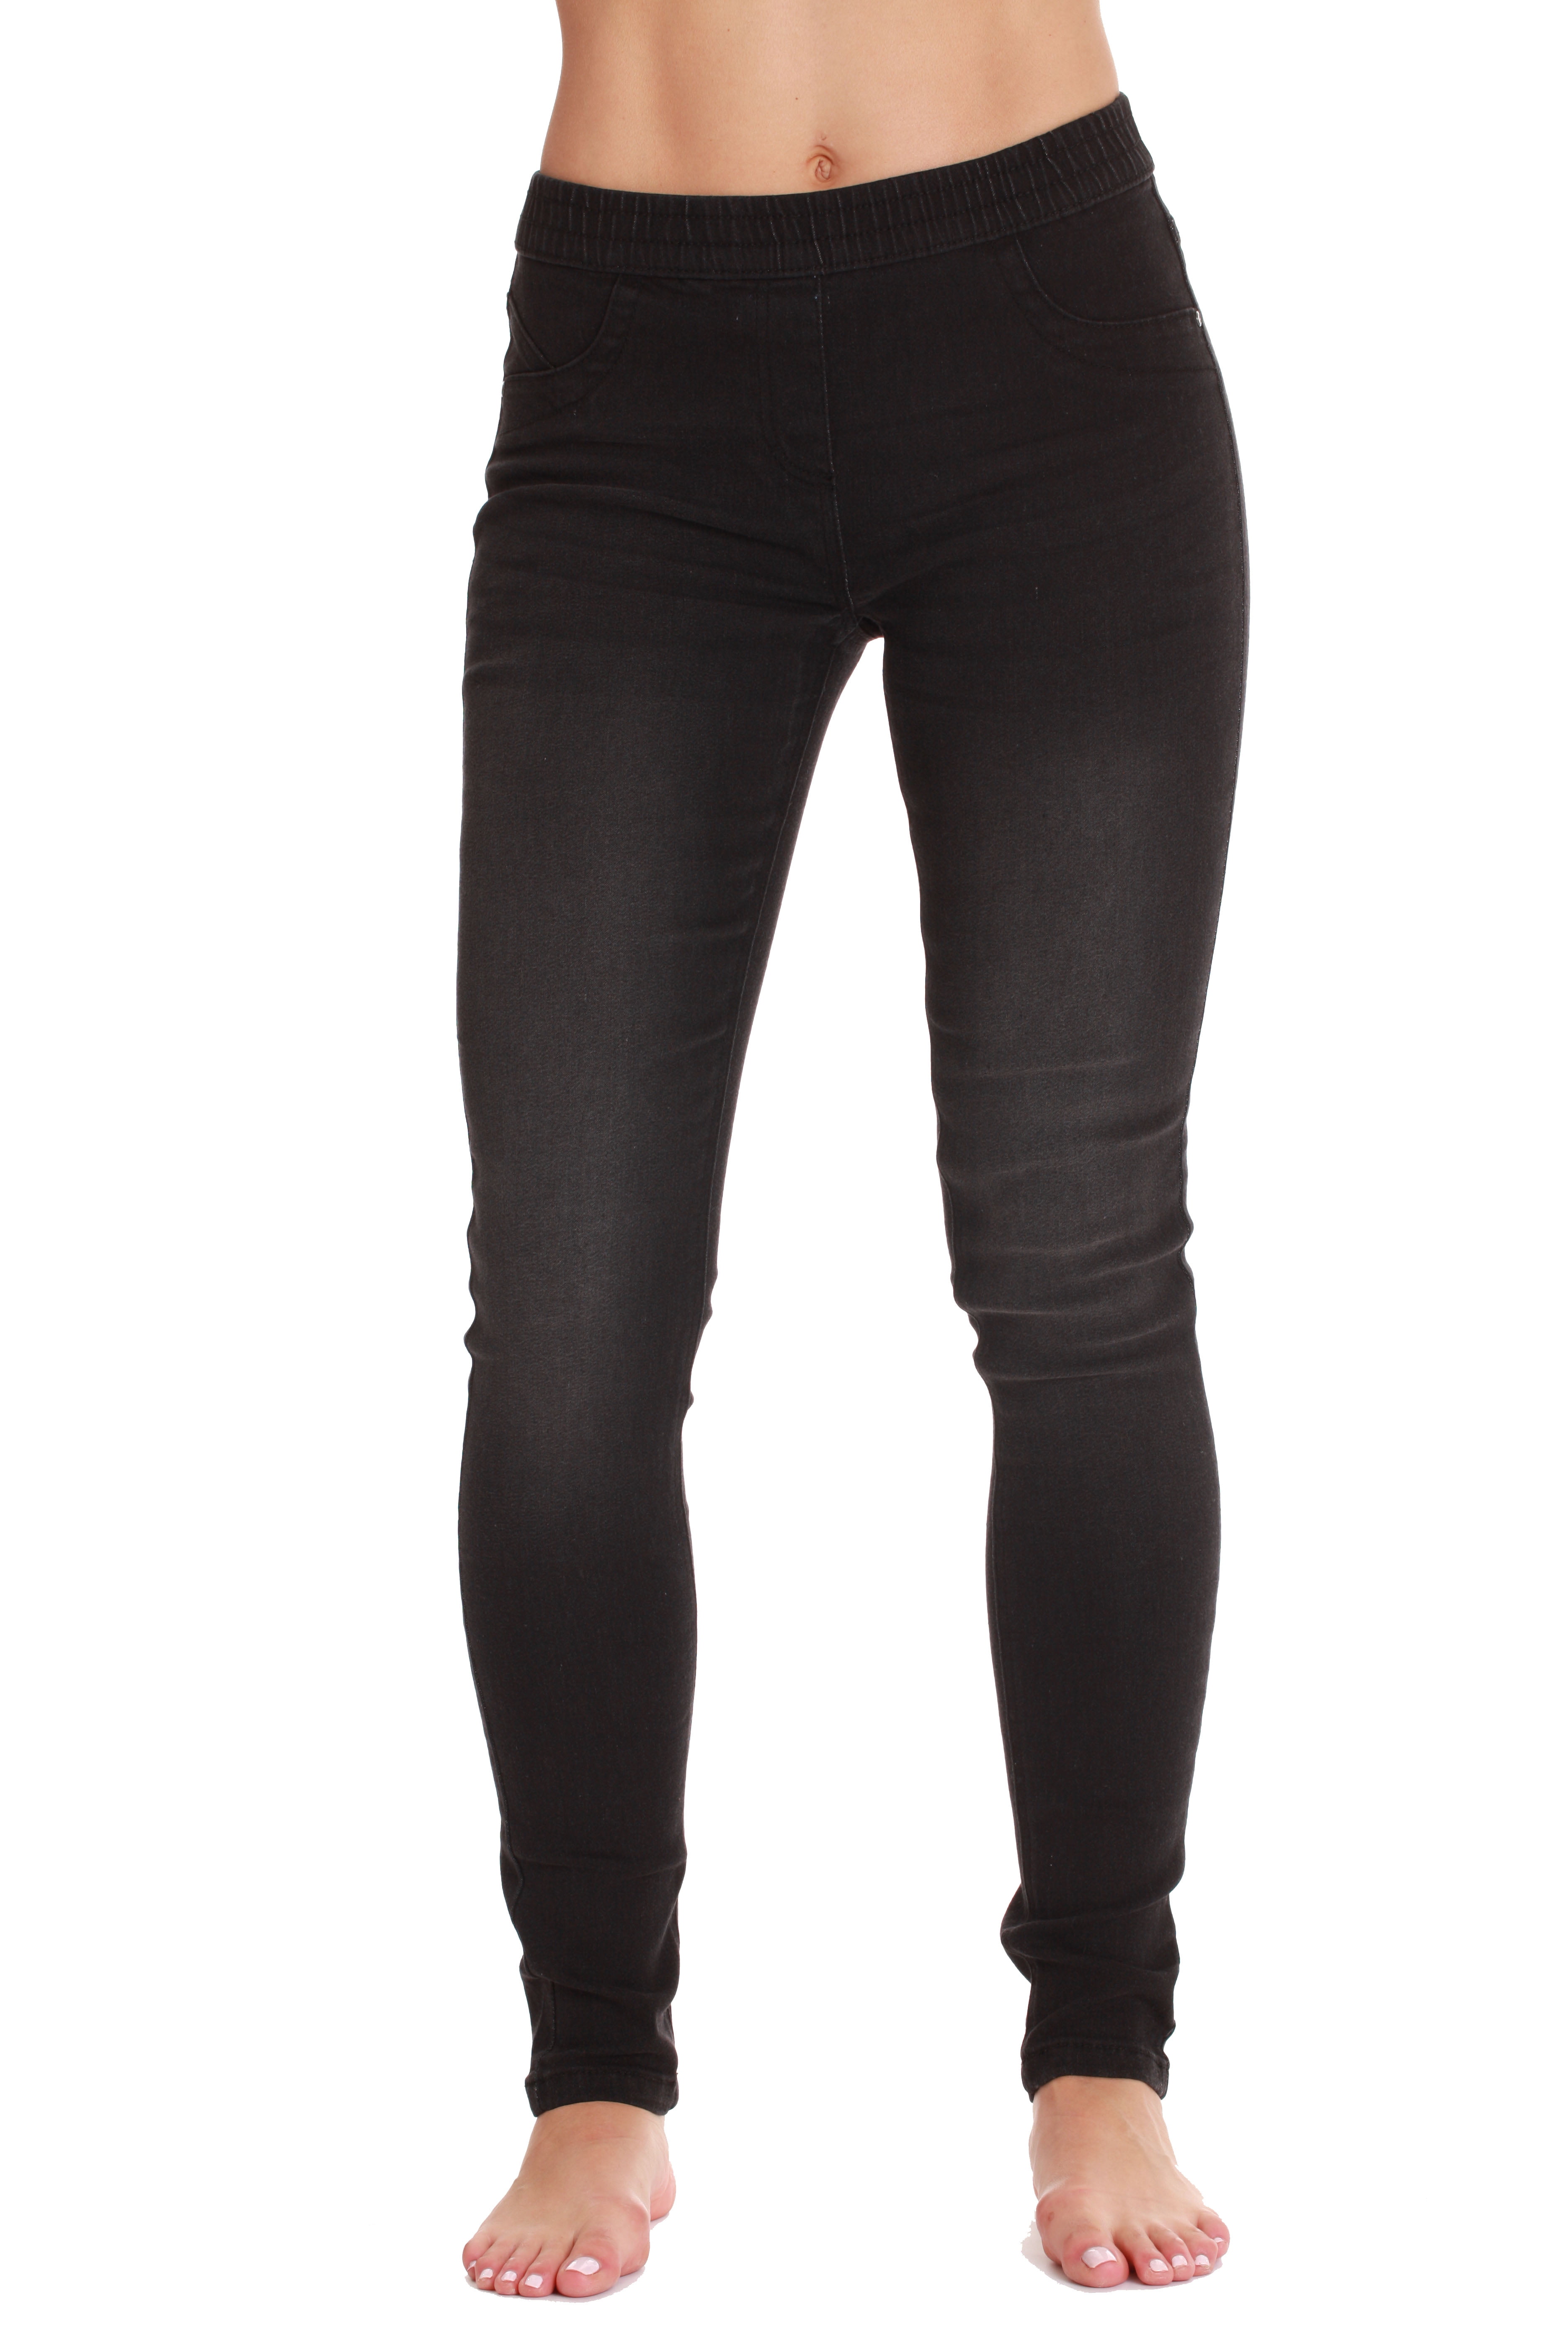 Just Love Women's Denim Jeggings with Pockets - Comfortable Stretch Jeans  Leggings (Black Denim, XX-Large) 